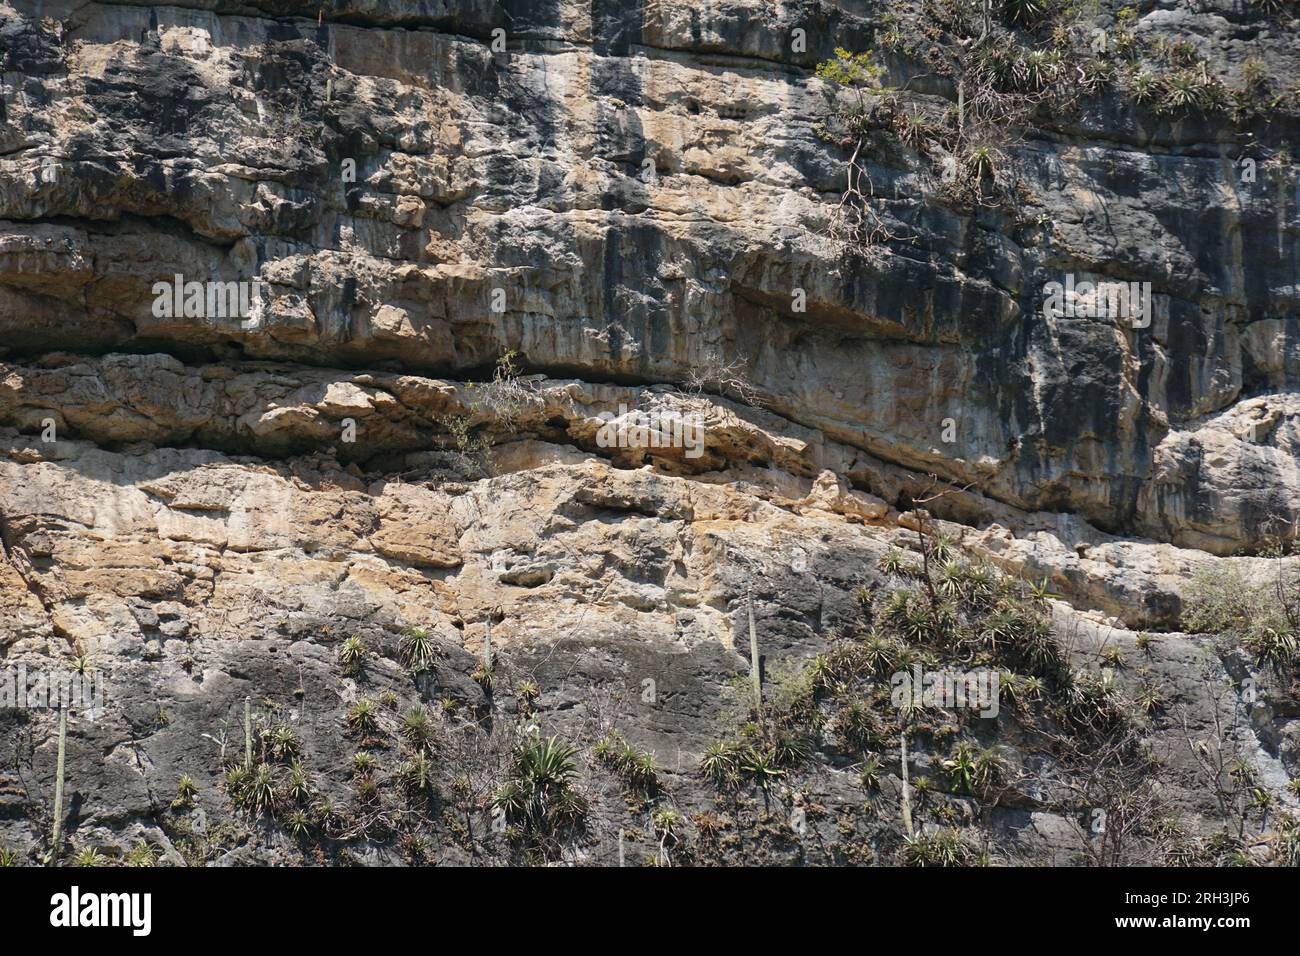 limestone, vegetation, sumidero canyon at chiapas, mexico Stock Photo